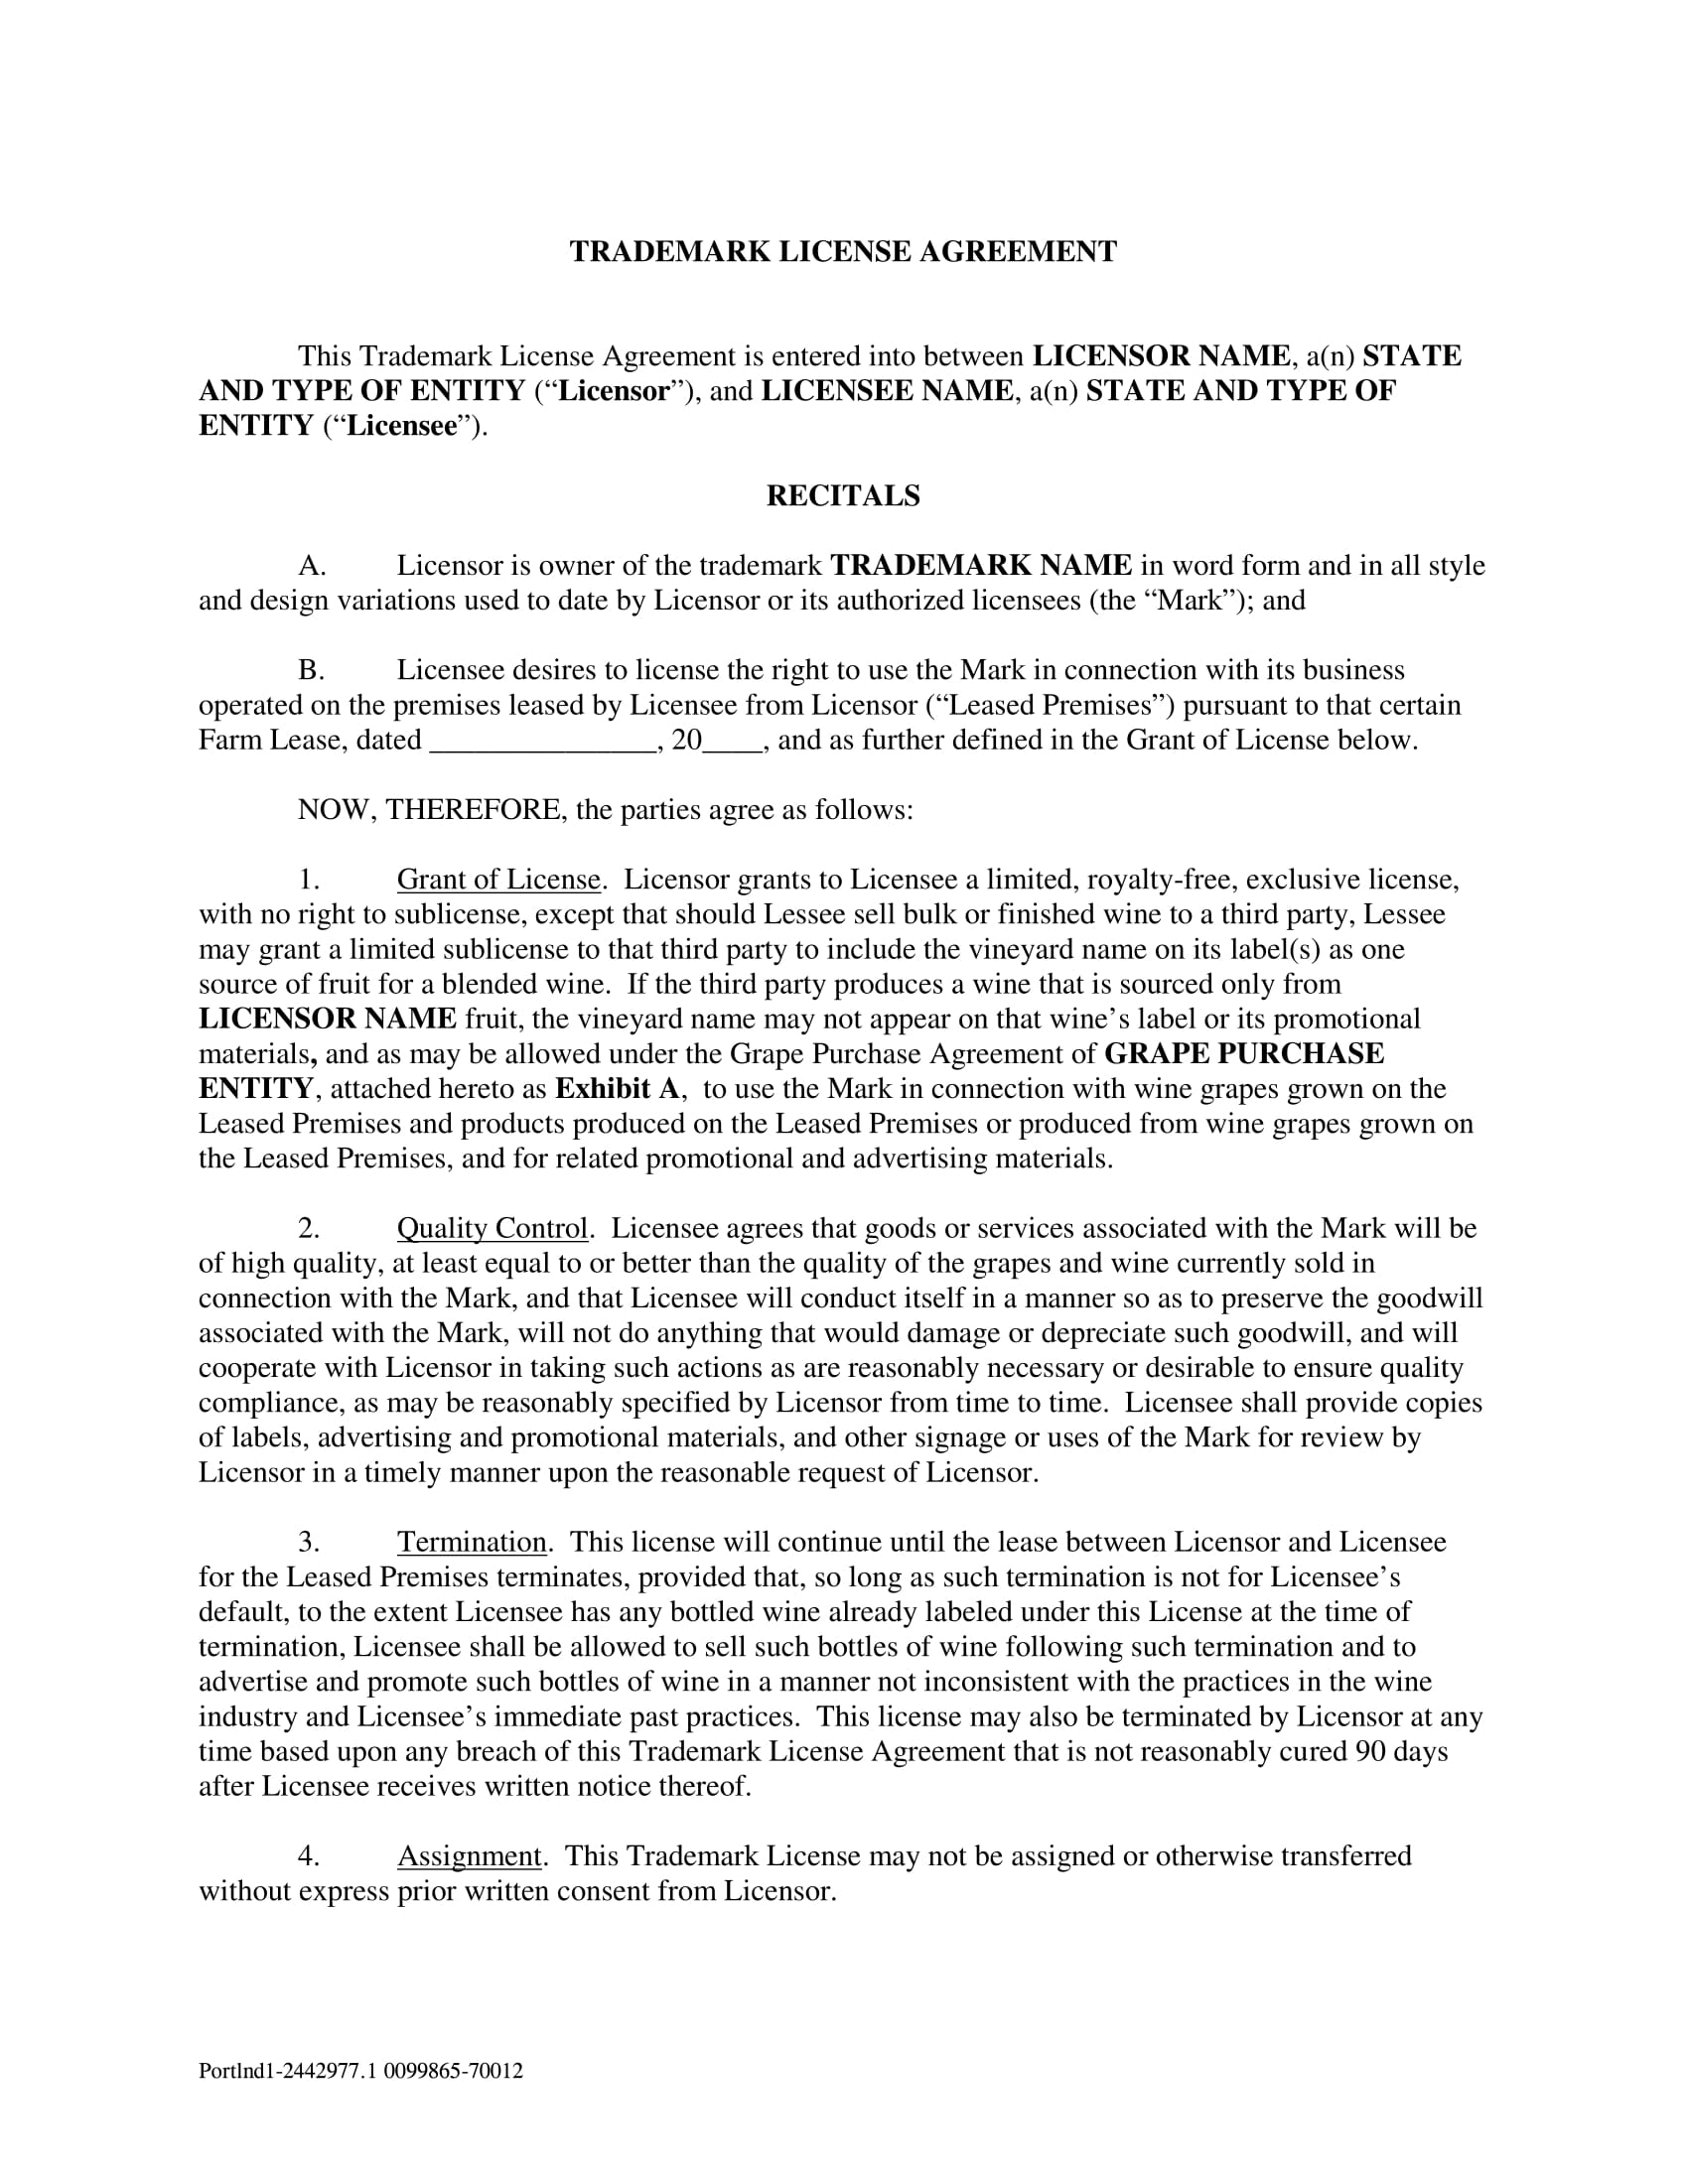 basic trademark license agreement form 1